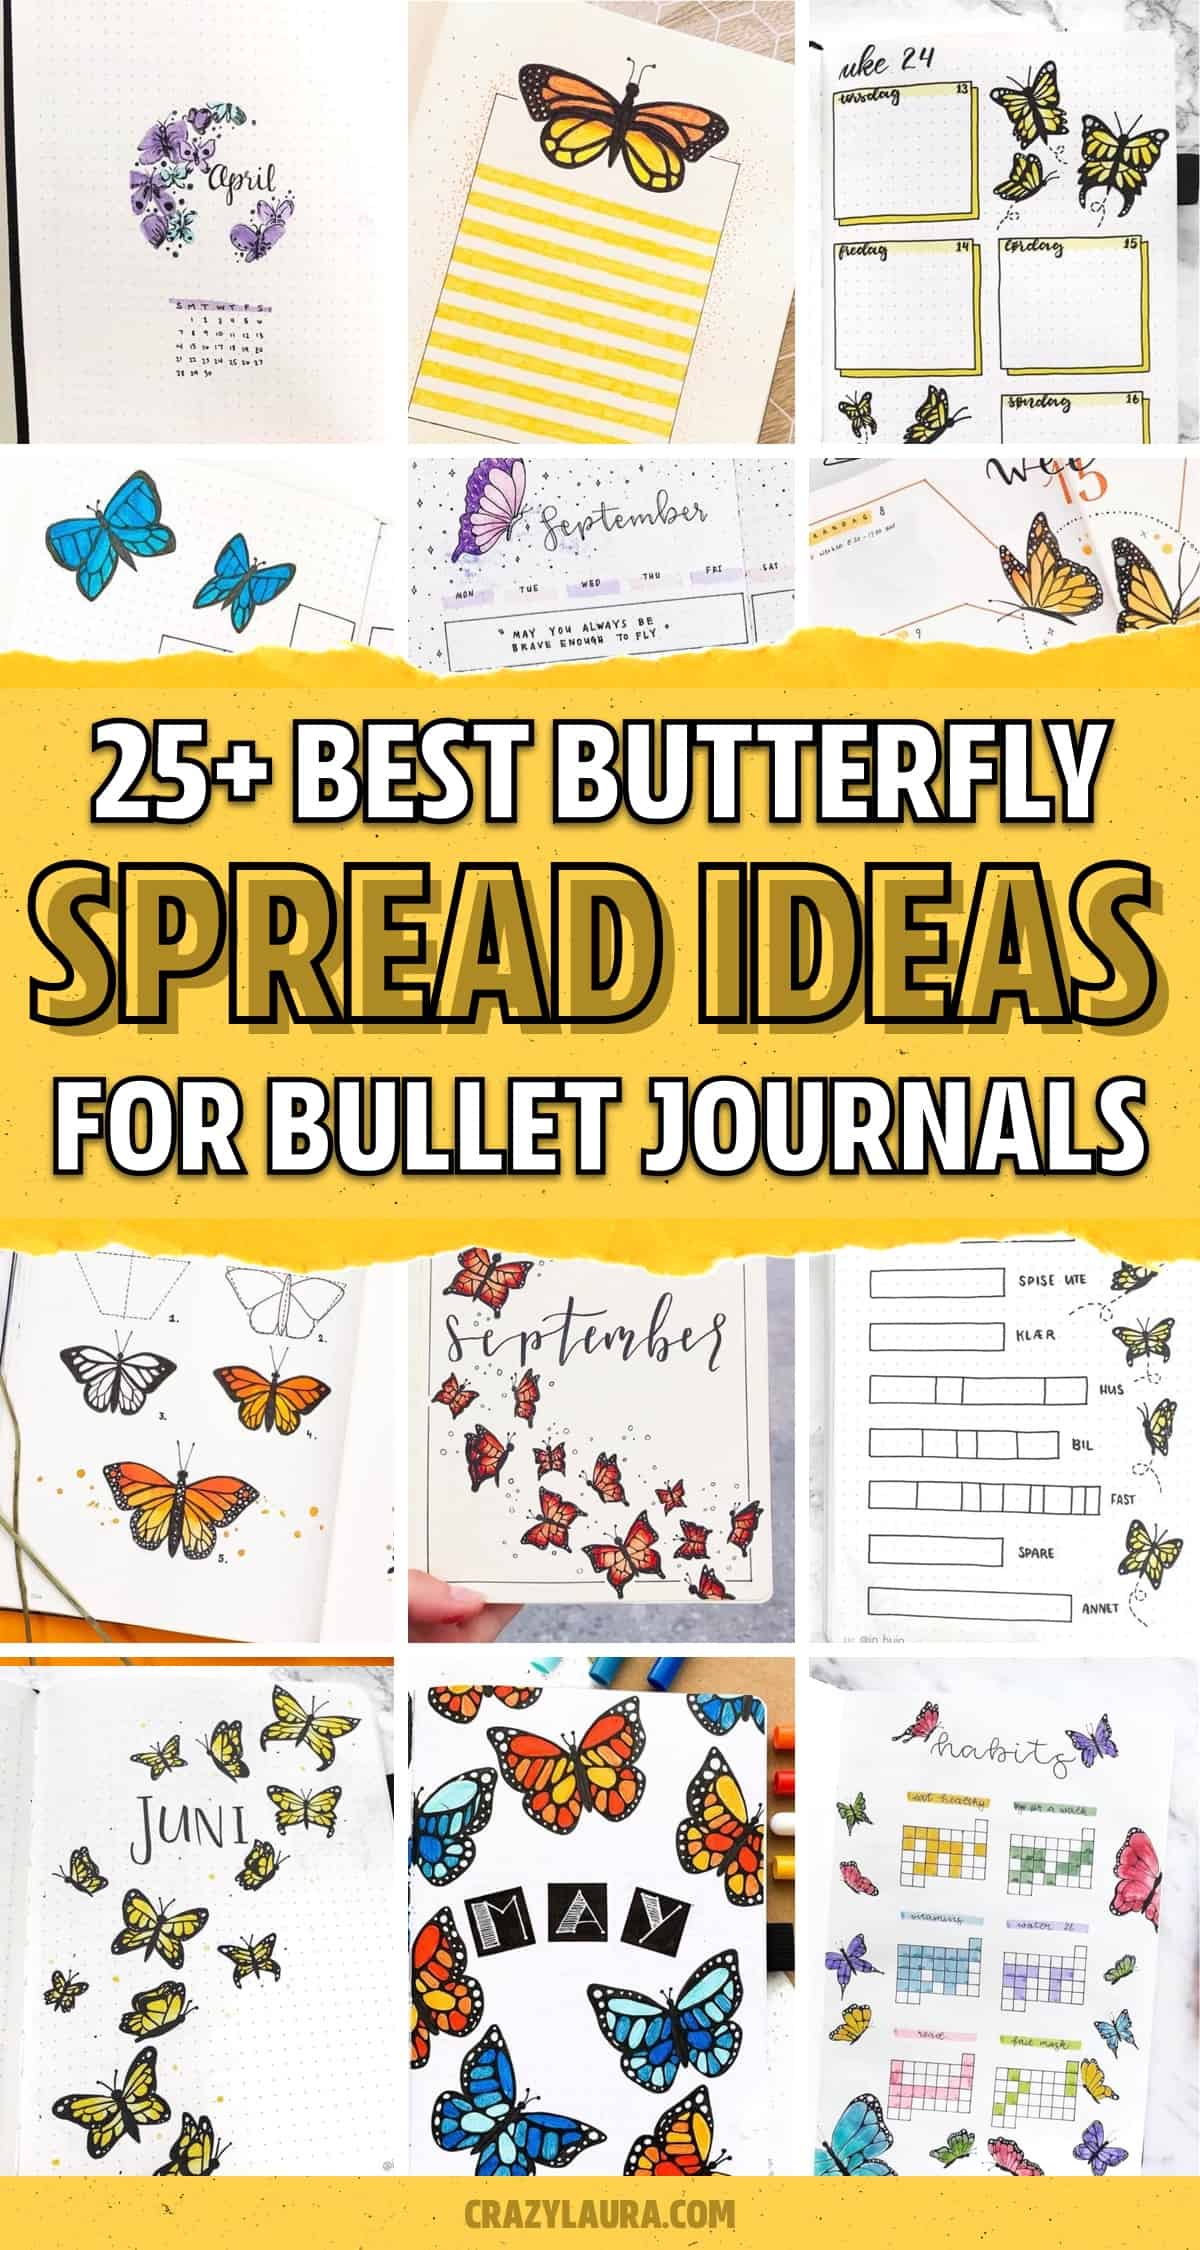 bujo spread ideas with butterfly theme